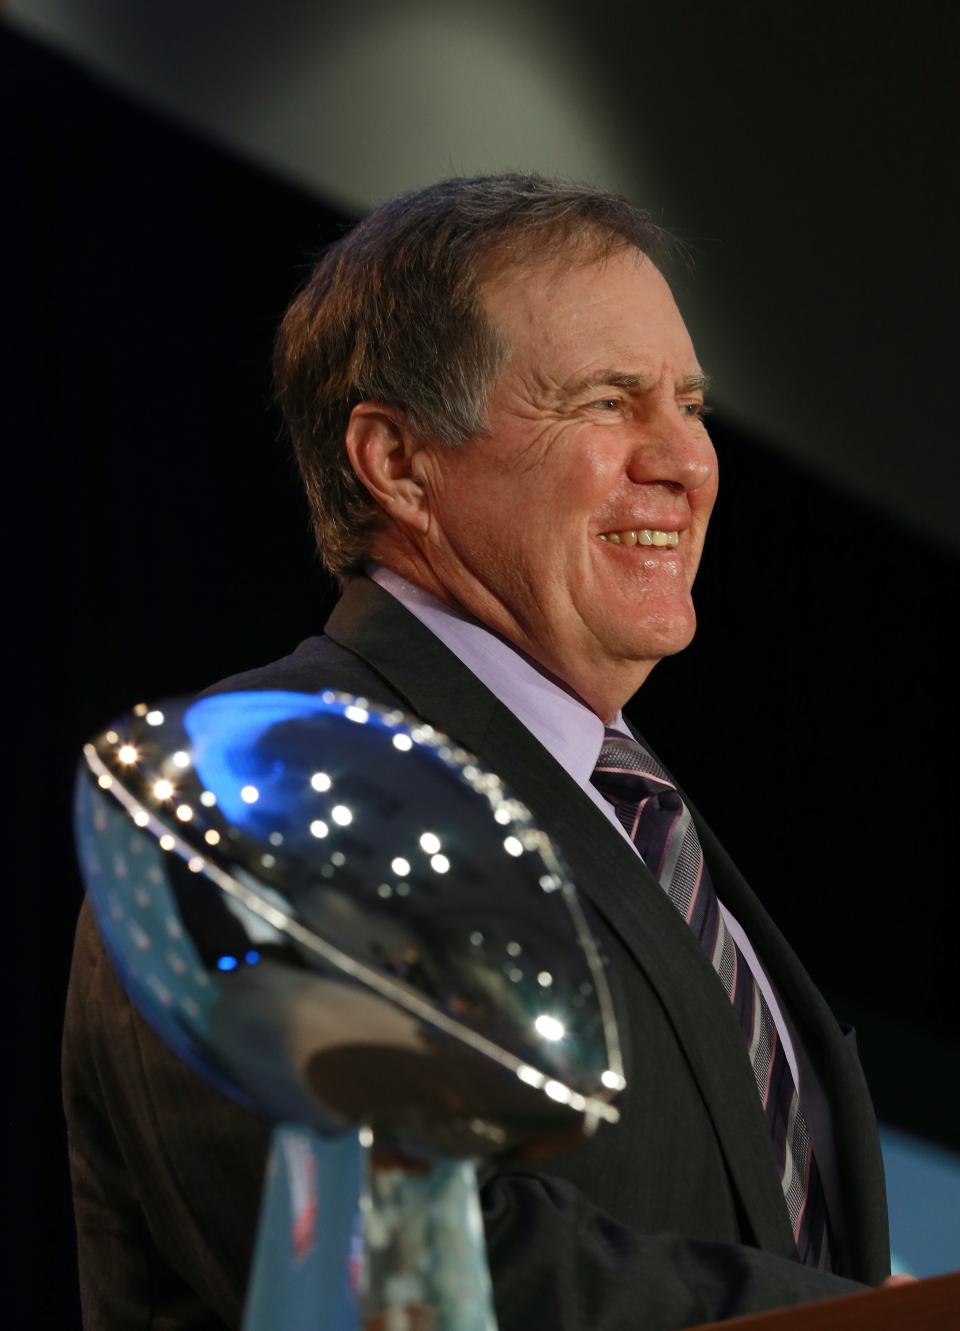 Patriots head coach Bill Belichick receives the Lombardi Trophy after winning Super Bowl LI in Houston.